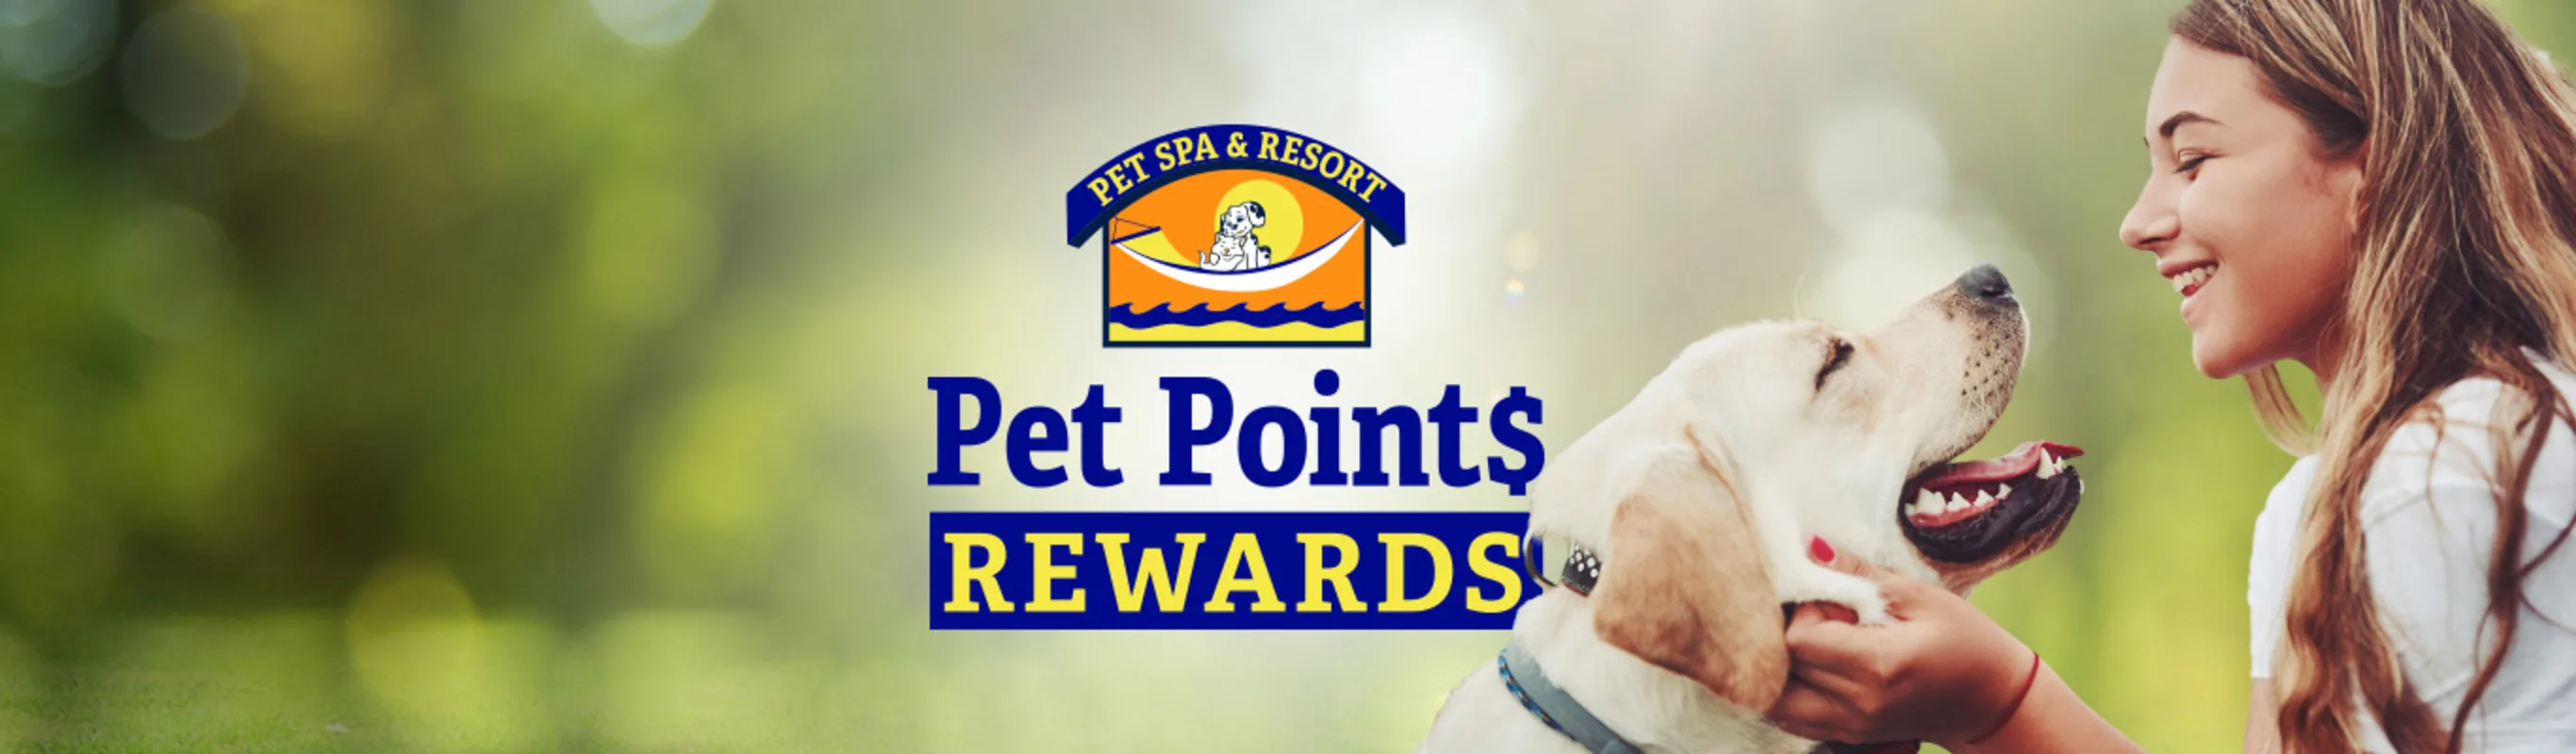 The Pet Spa & Resort loyalty rewards program